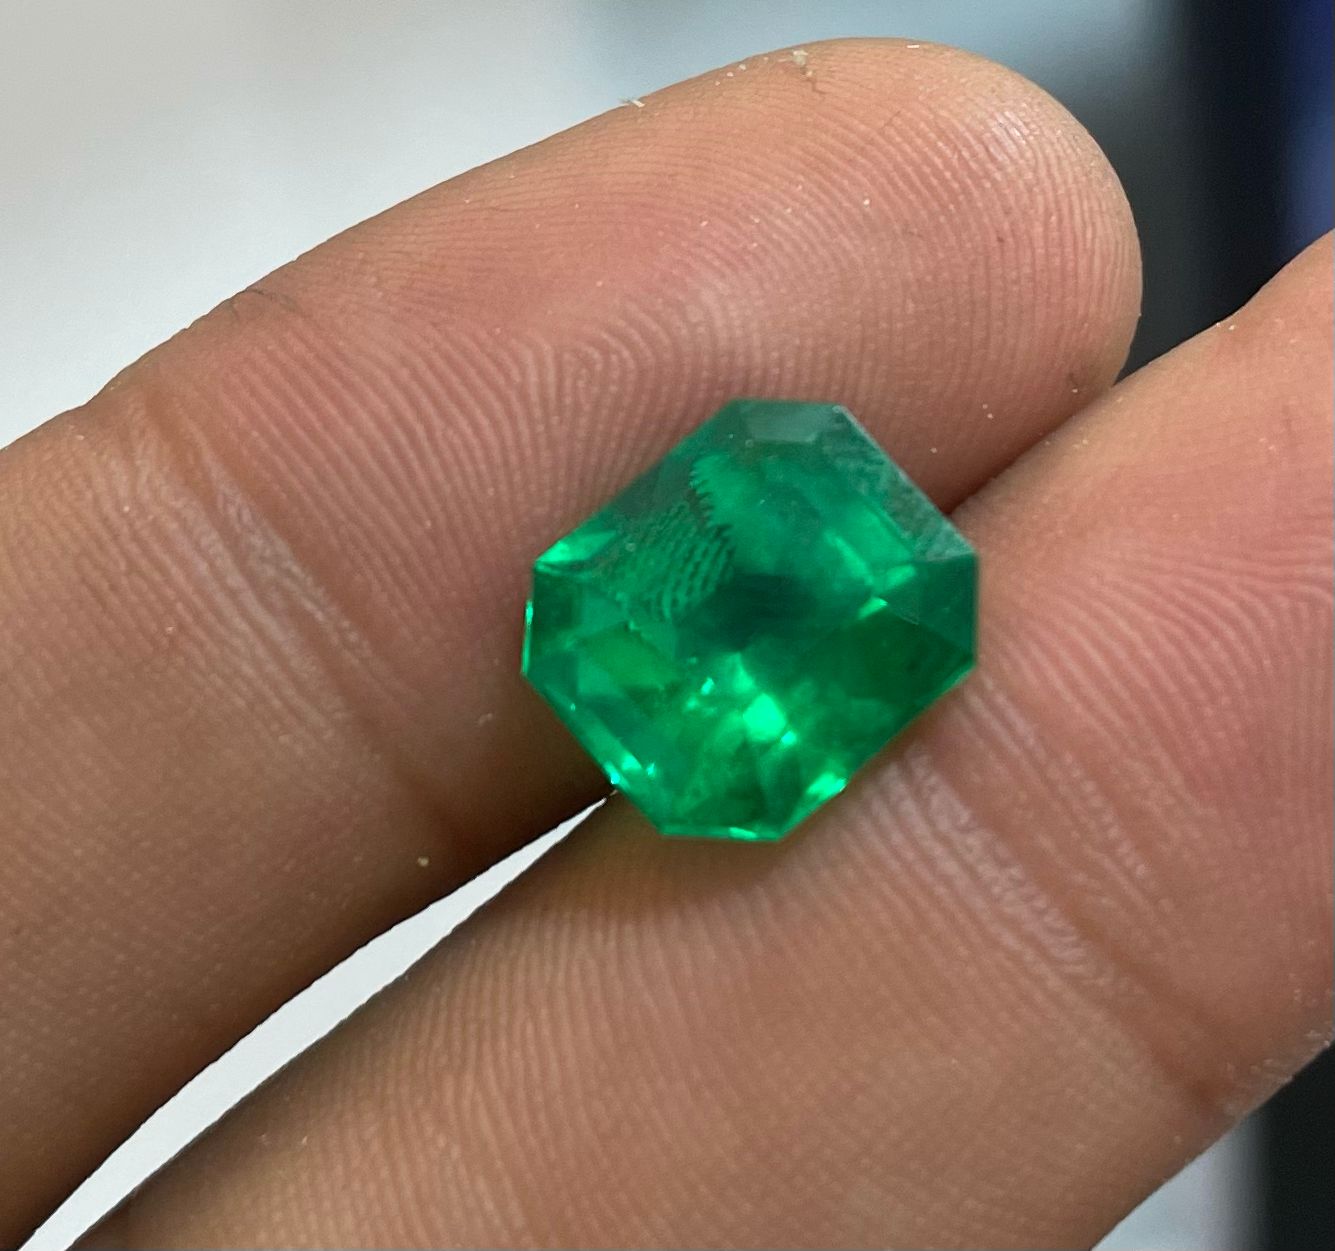 Characteristics of good emeralds